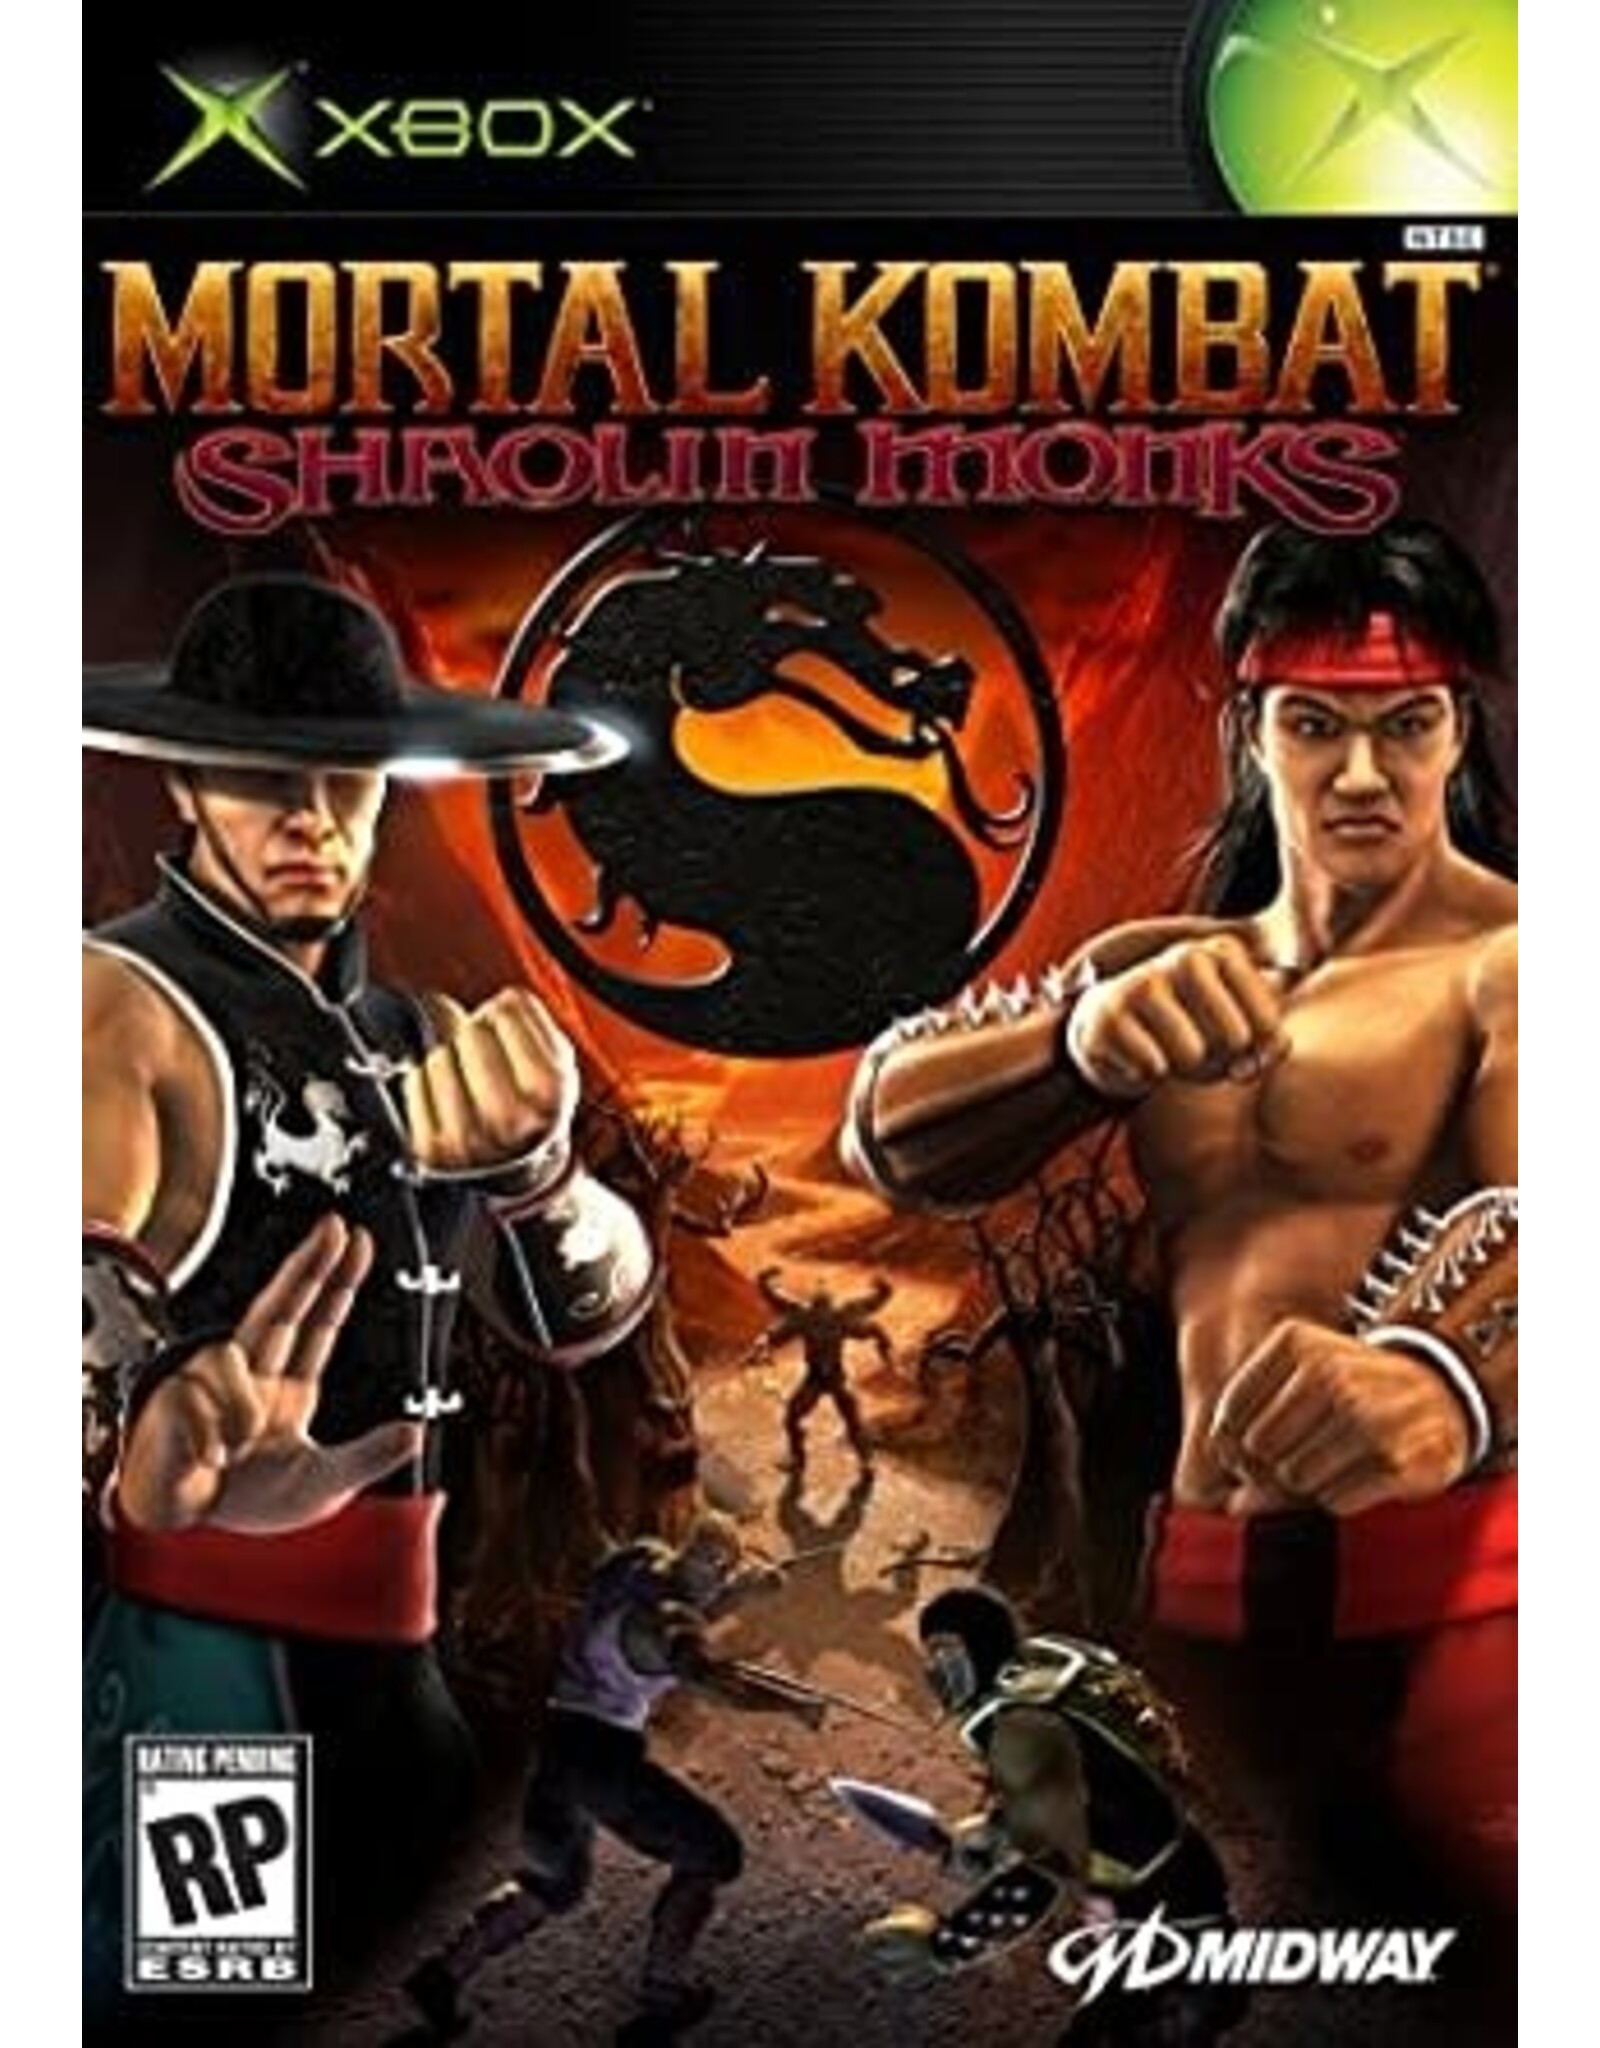 Xbox Mortal Kombat Shaolin Monks (No Manual)